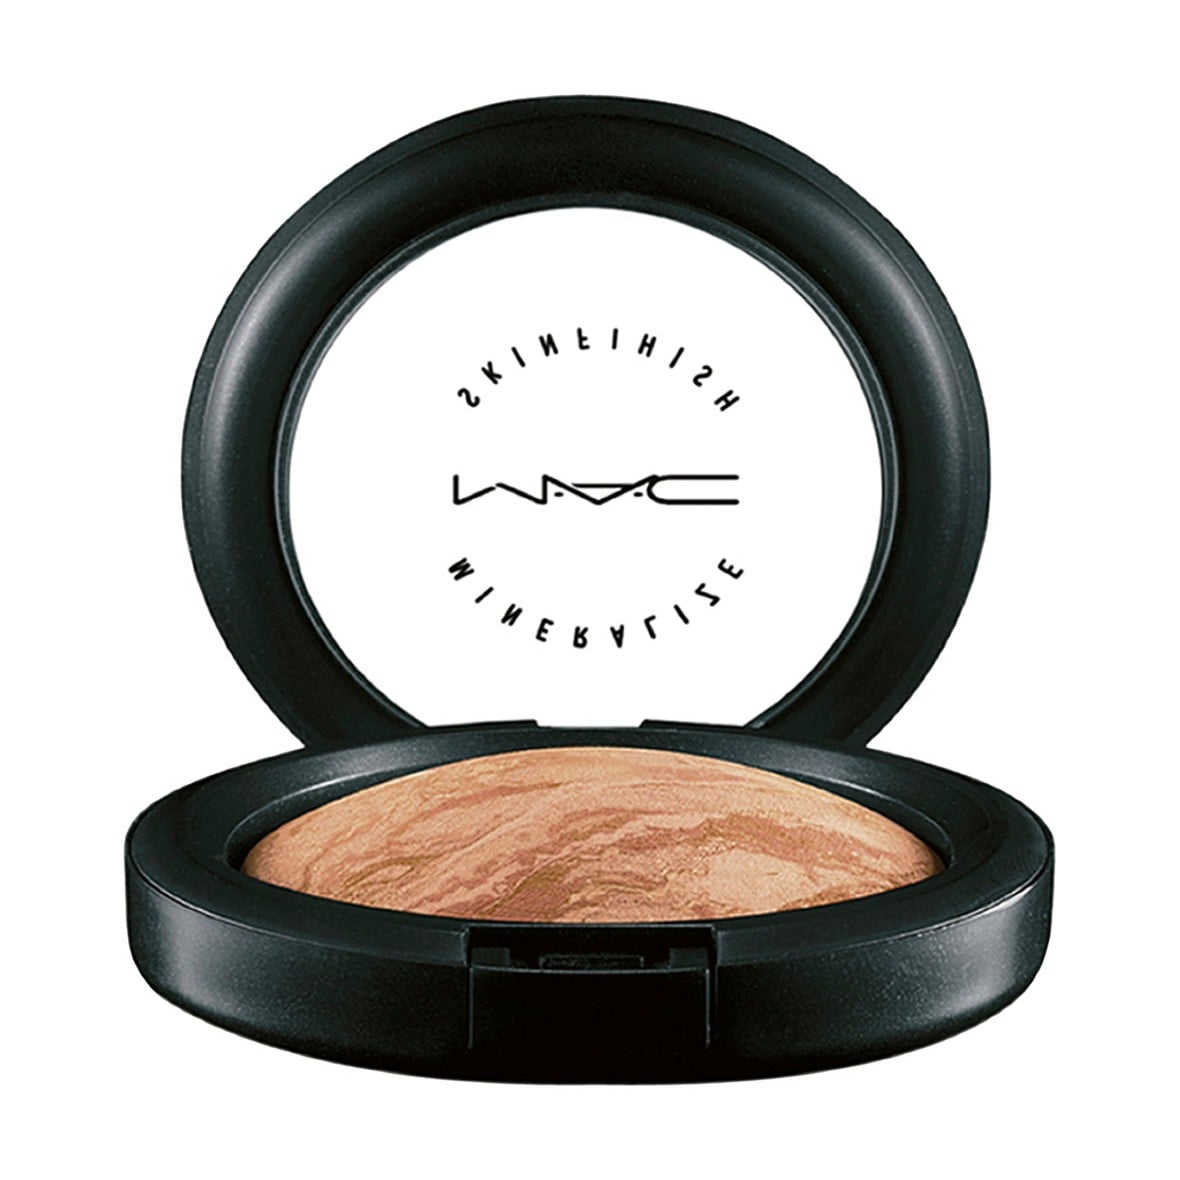 Uitgaand hiërarchie bezoek What Is the Best MAC Cosmetics Product? | POPSUGAR Beauty